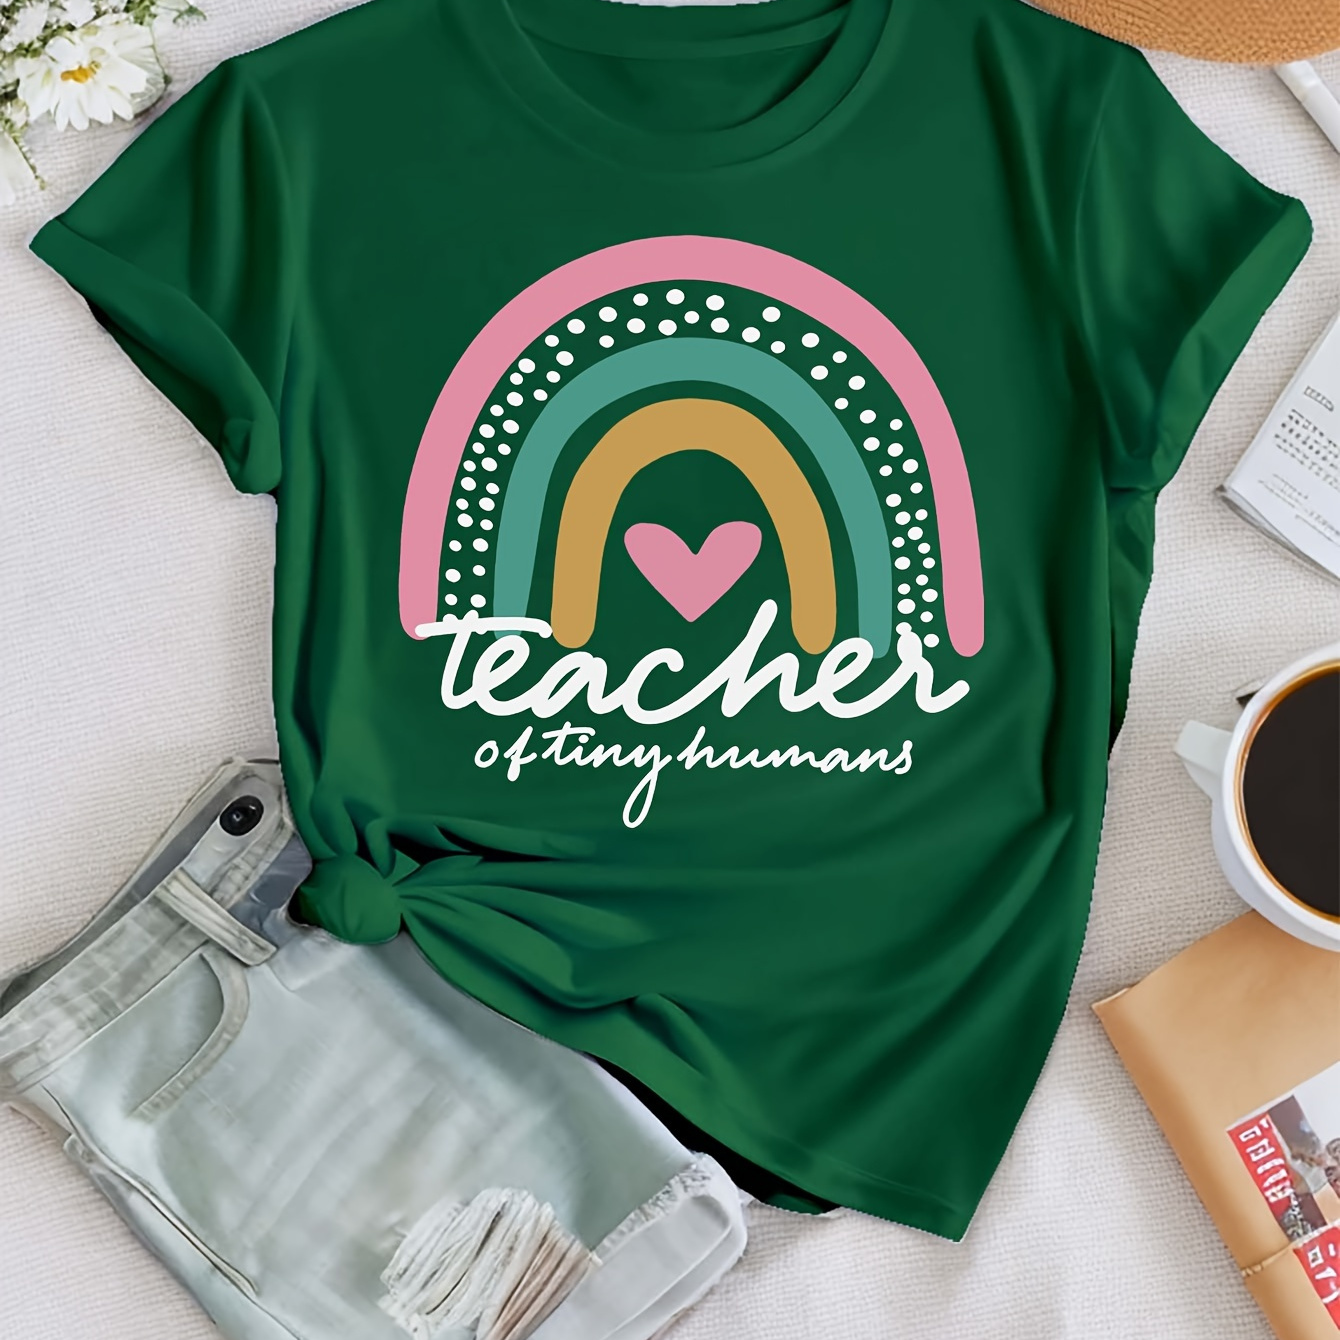 

Rainbow Teacher Print T-shirt, Short Sleeve Crew Neck Casual Top For Summer & Spring, Women's Clothing